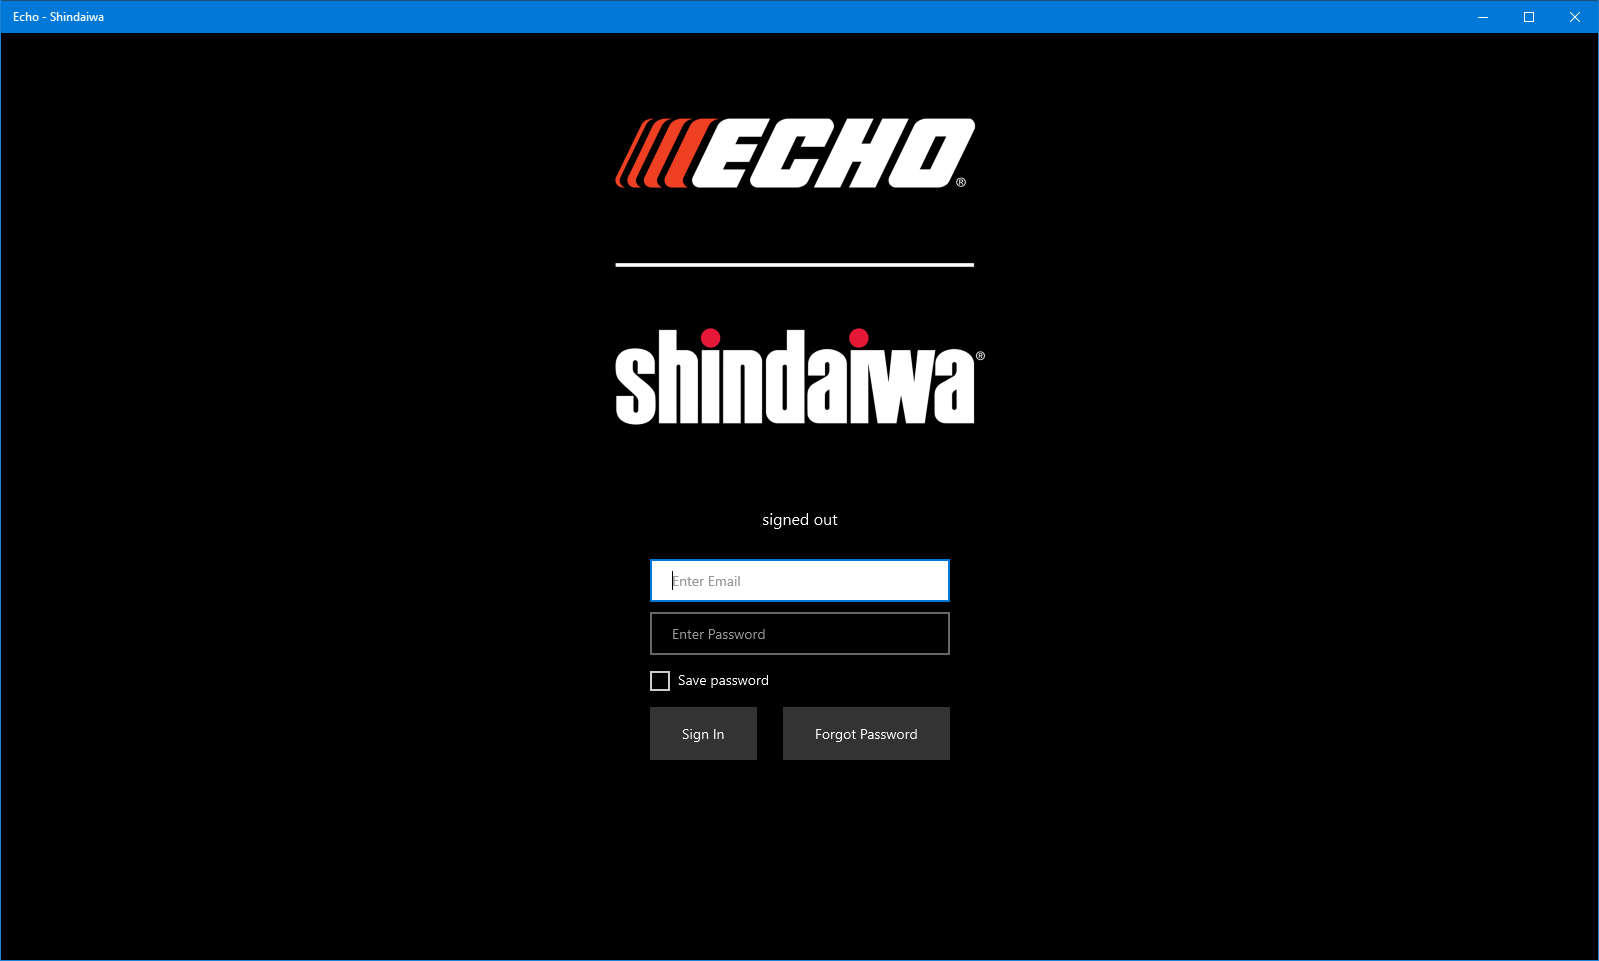 Echo - Shindaiwa